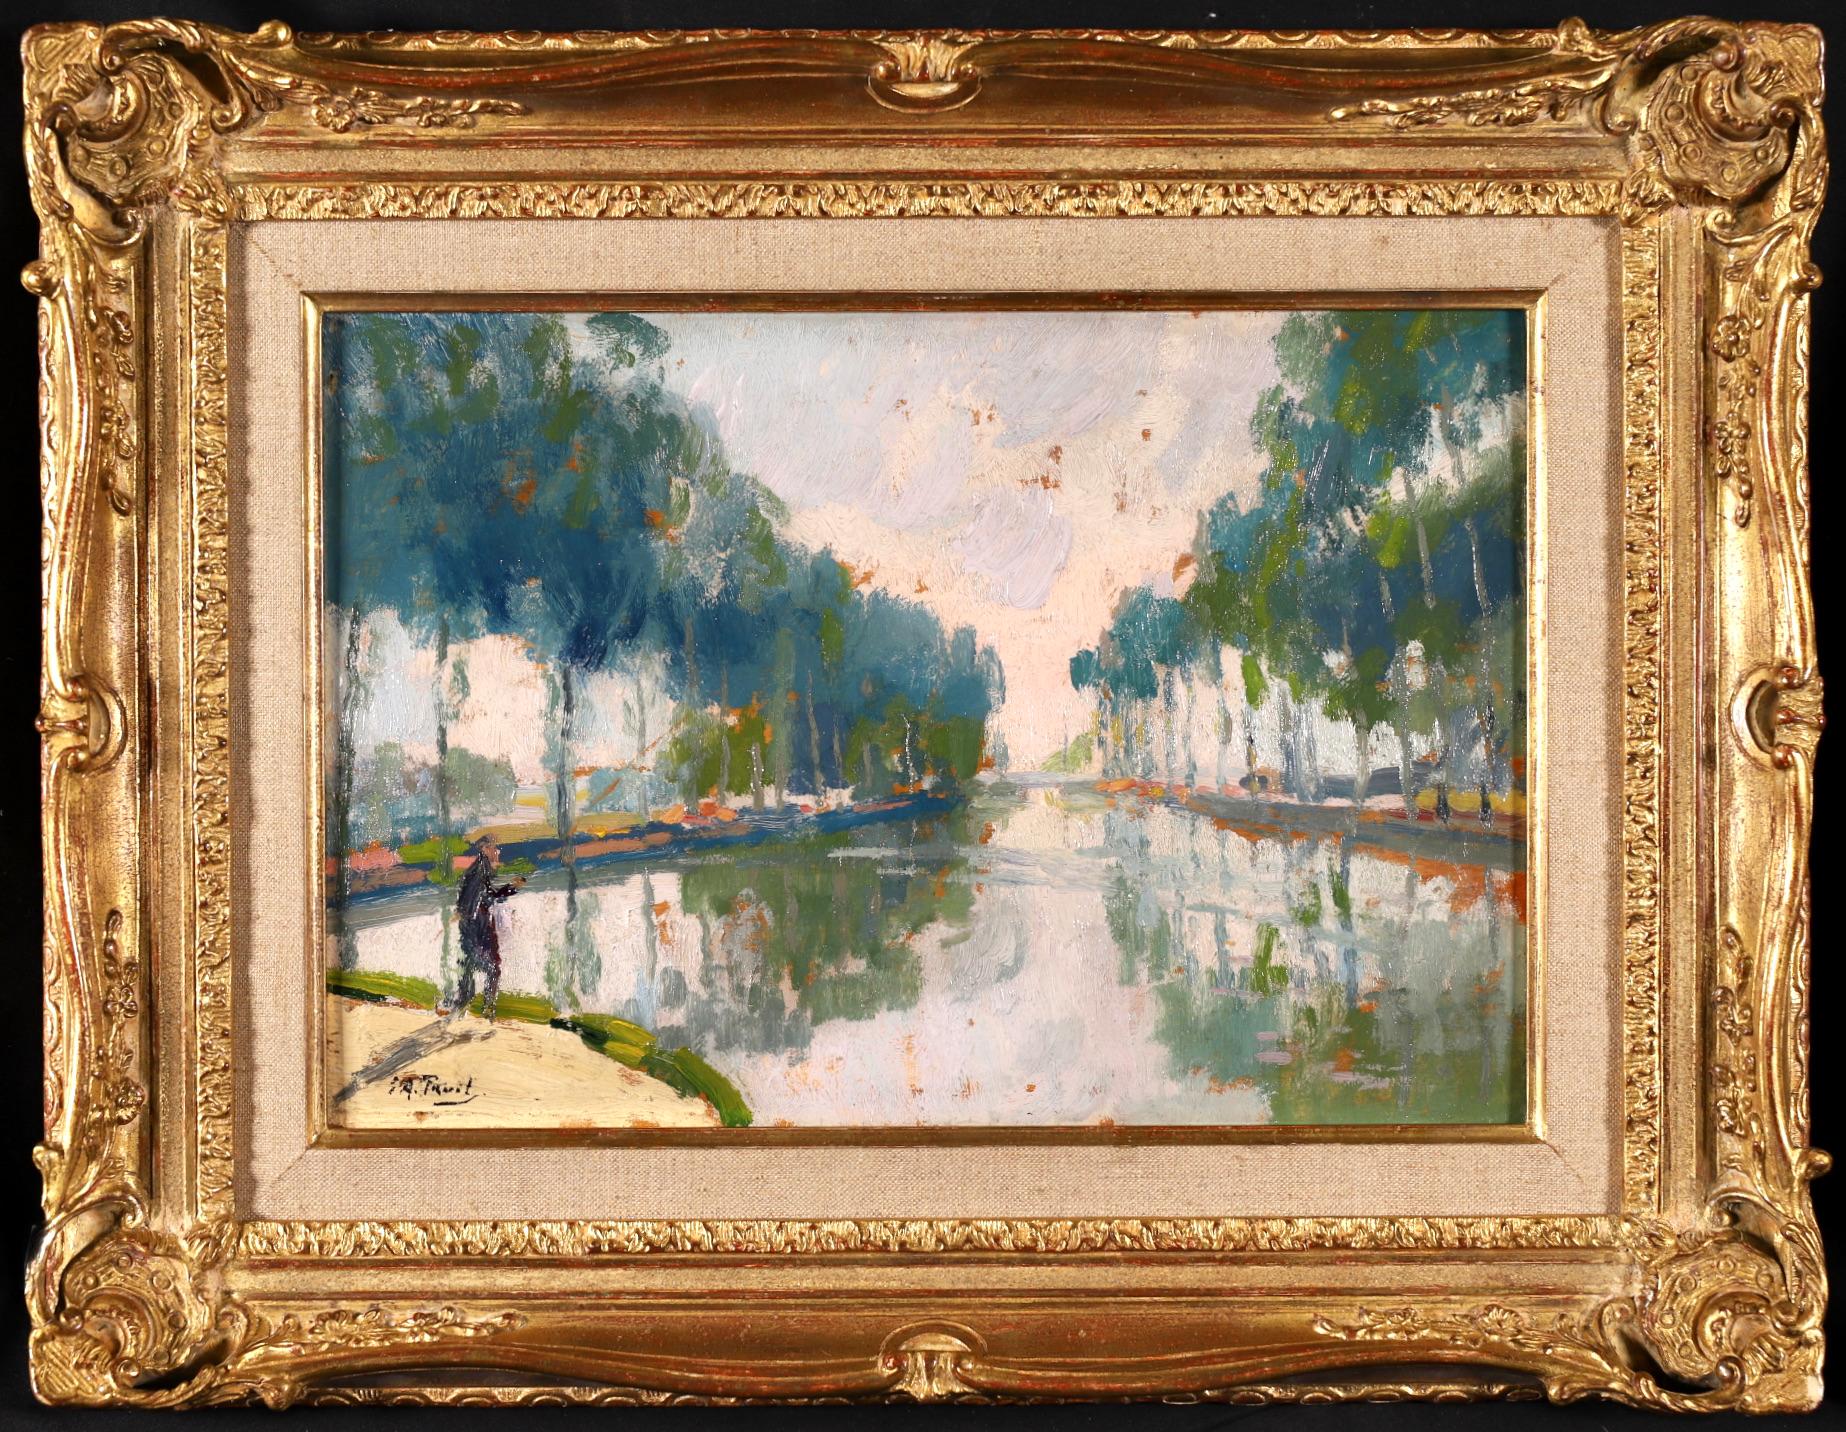  Fishing - Post Impressionist Oil, Figure by River Landscape by Elie A Pavil